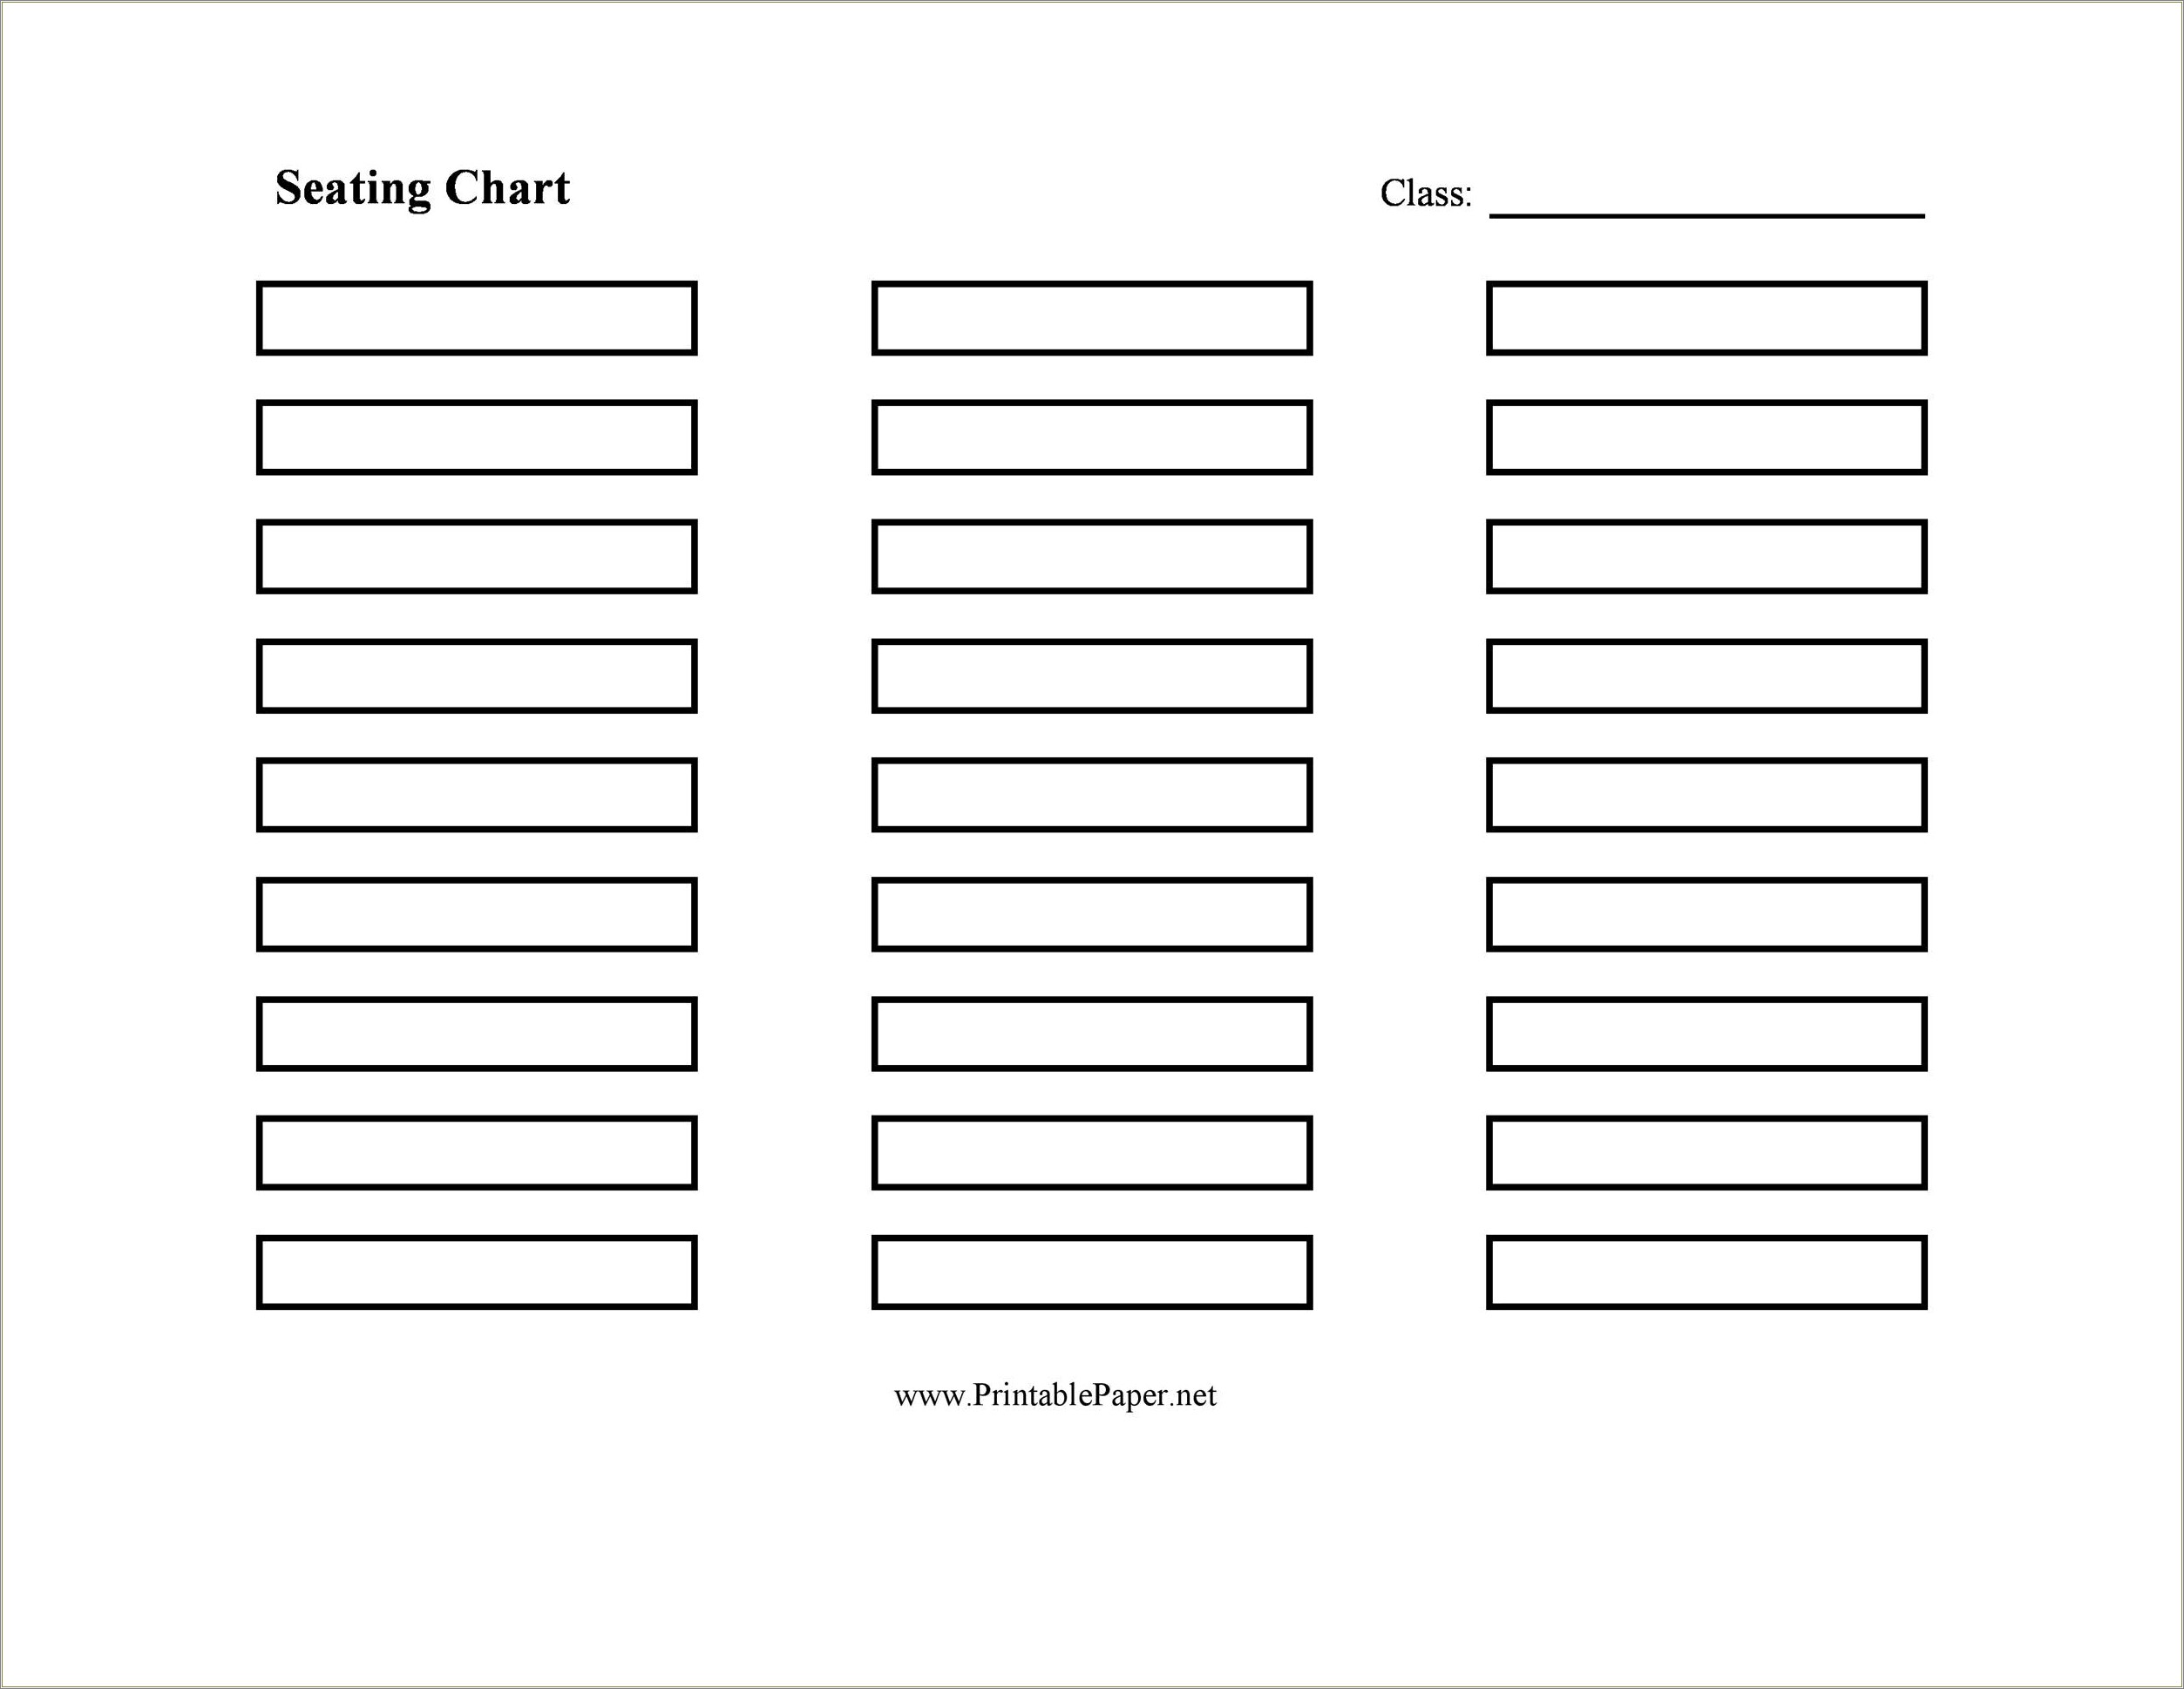 Free Classroom Seating Chart Template Microsoft Word